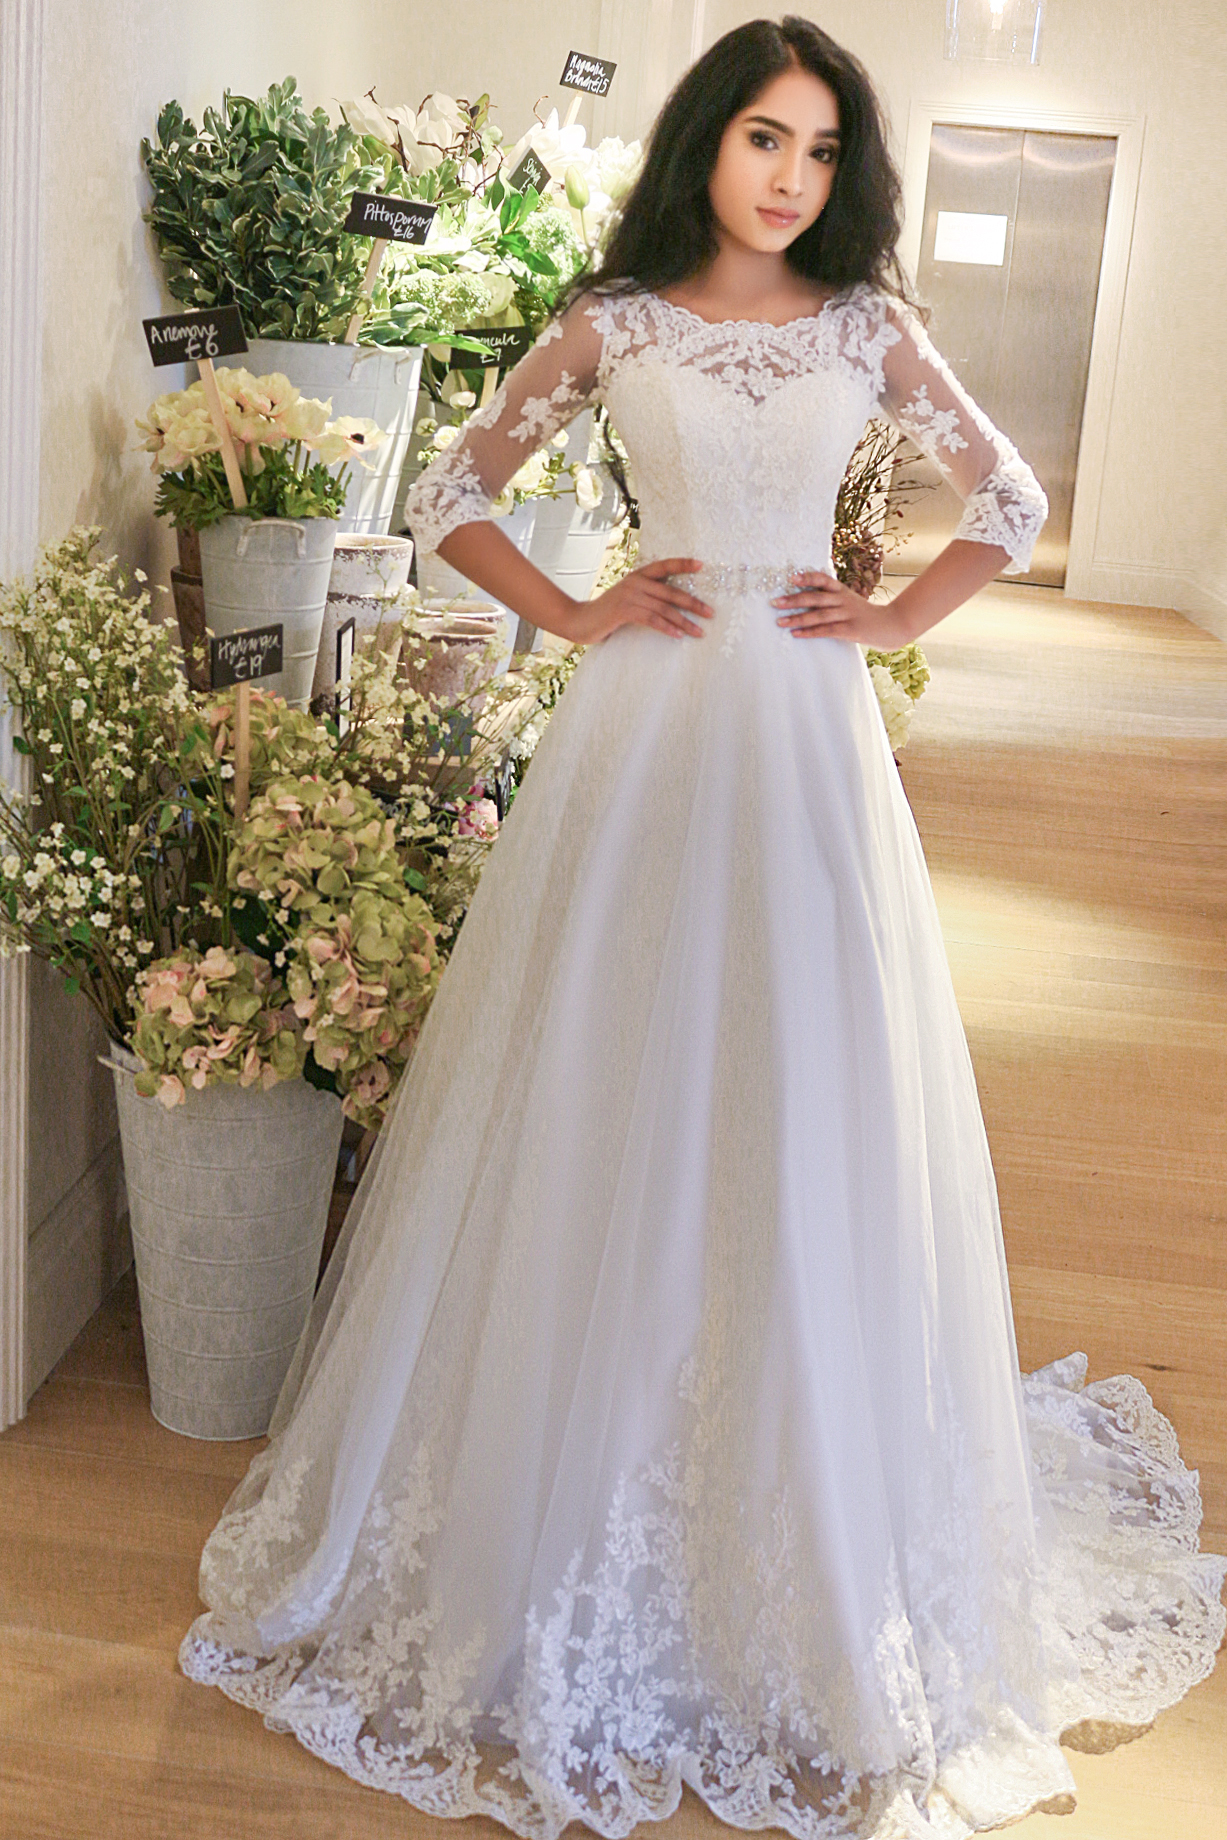 Bridal Boutique & Wedding Dress